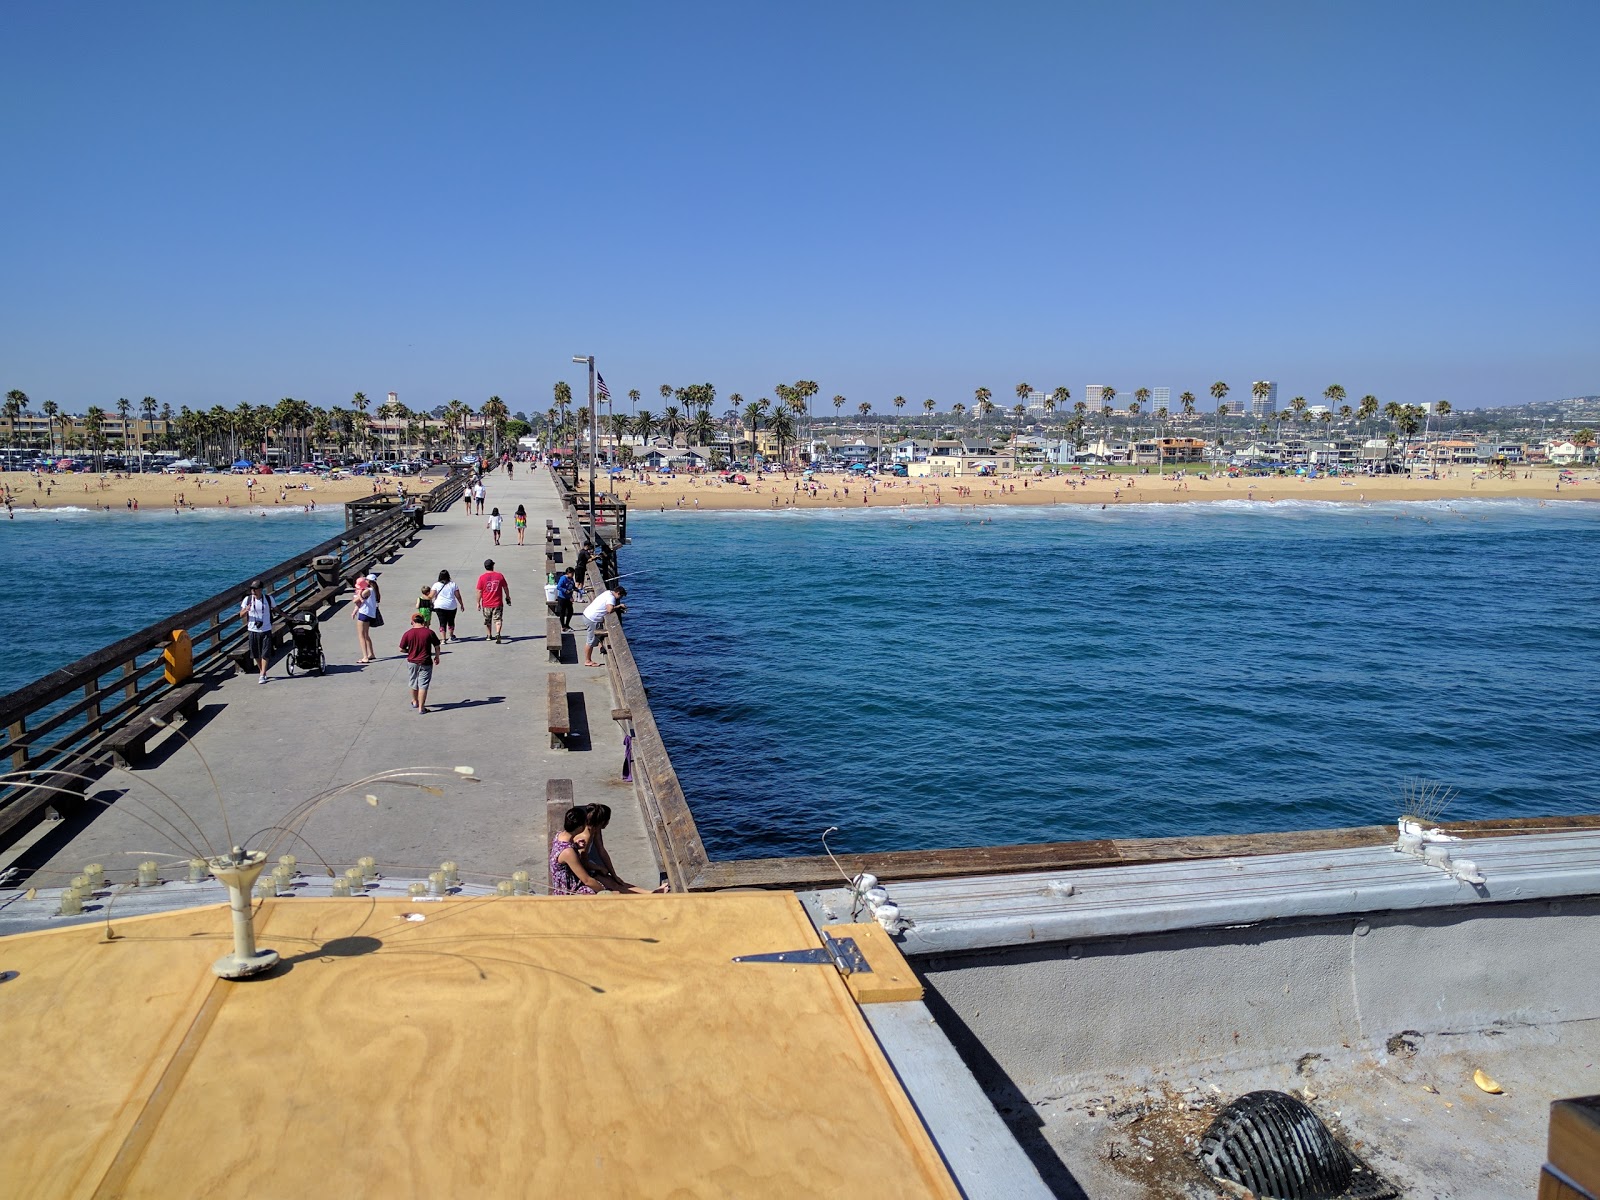 Fotografie cu Balboa Peninsula beach și așezarea